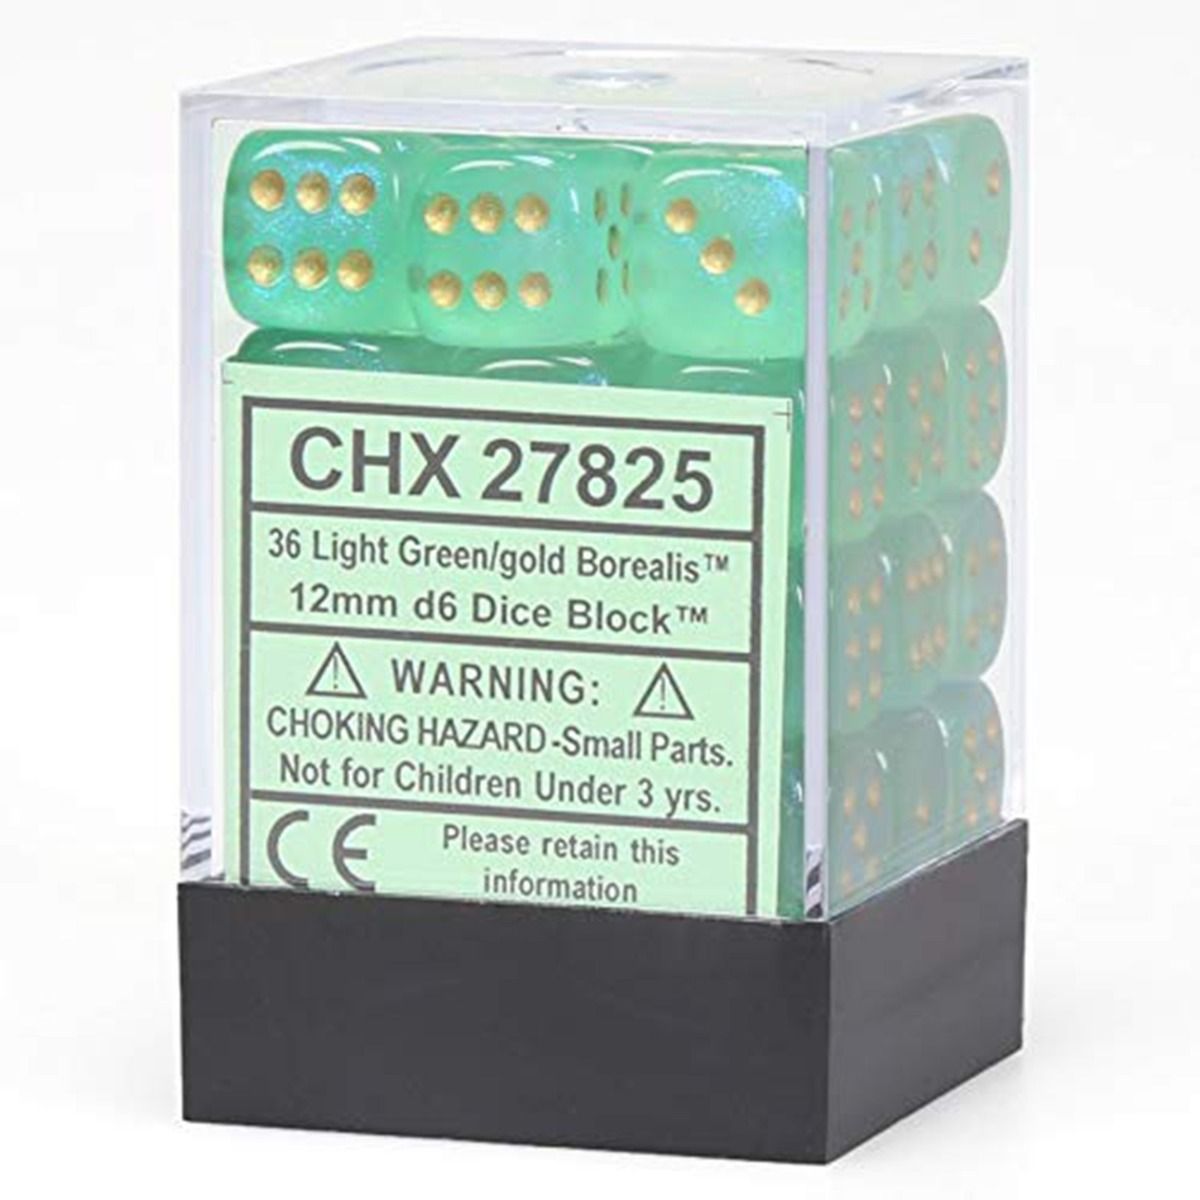 CHX 27825 Borealis #2 12mm d6 Light Green/Gold Block (36)